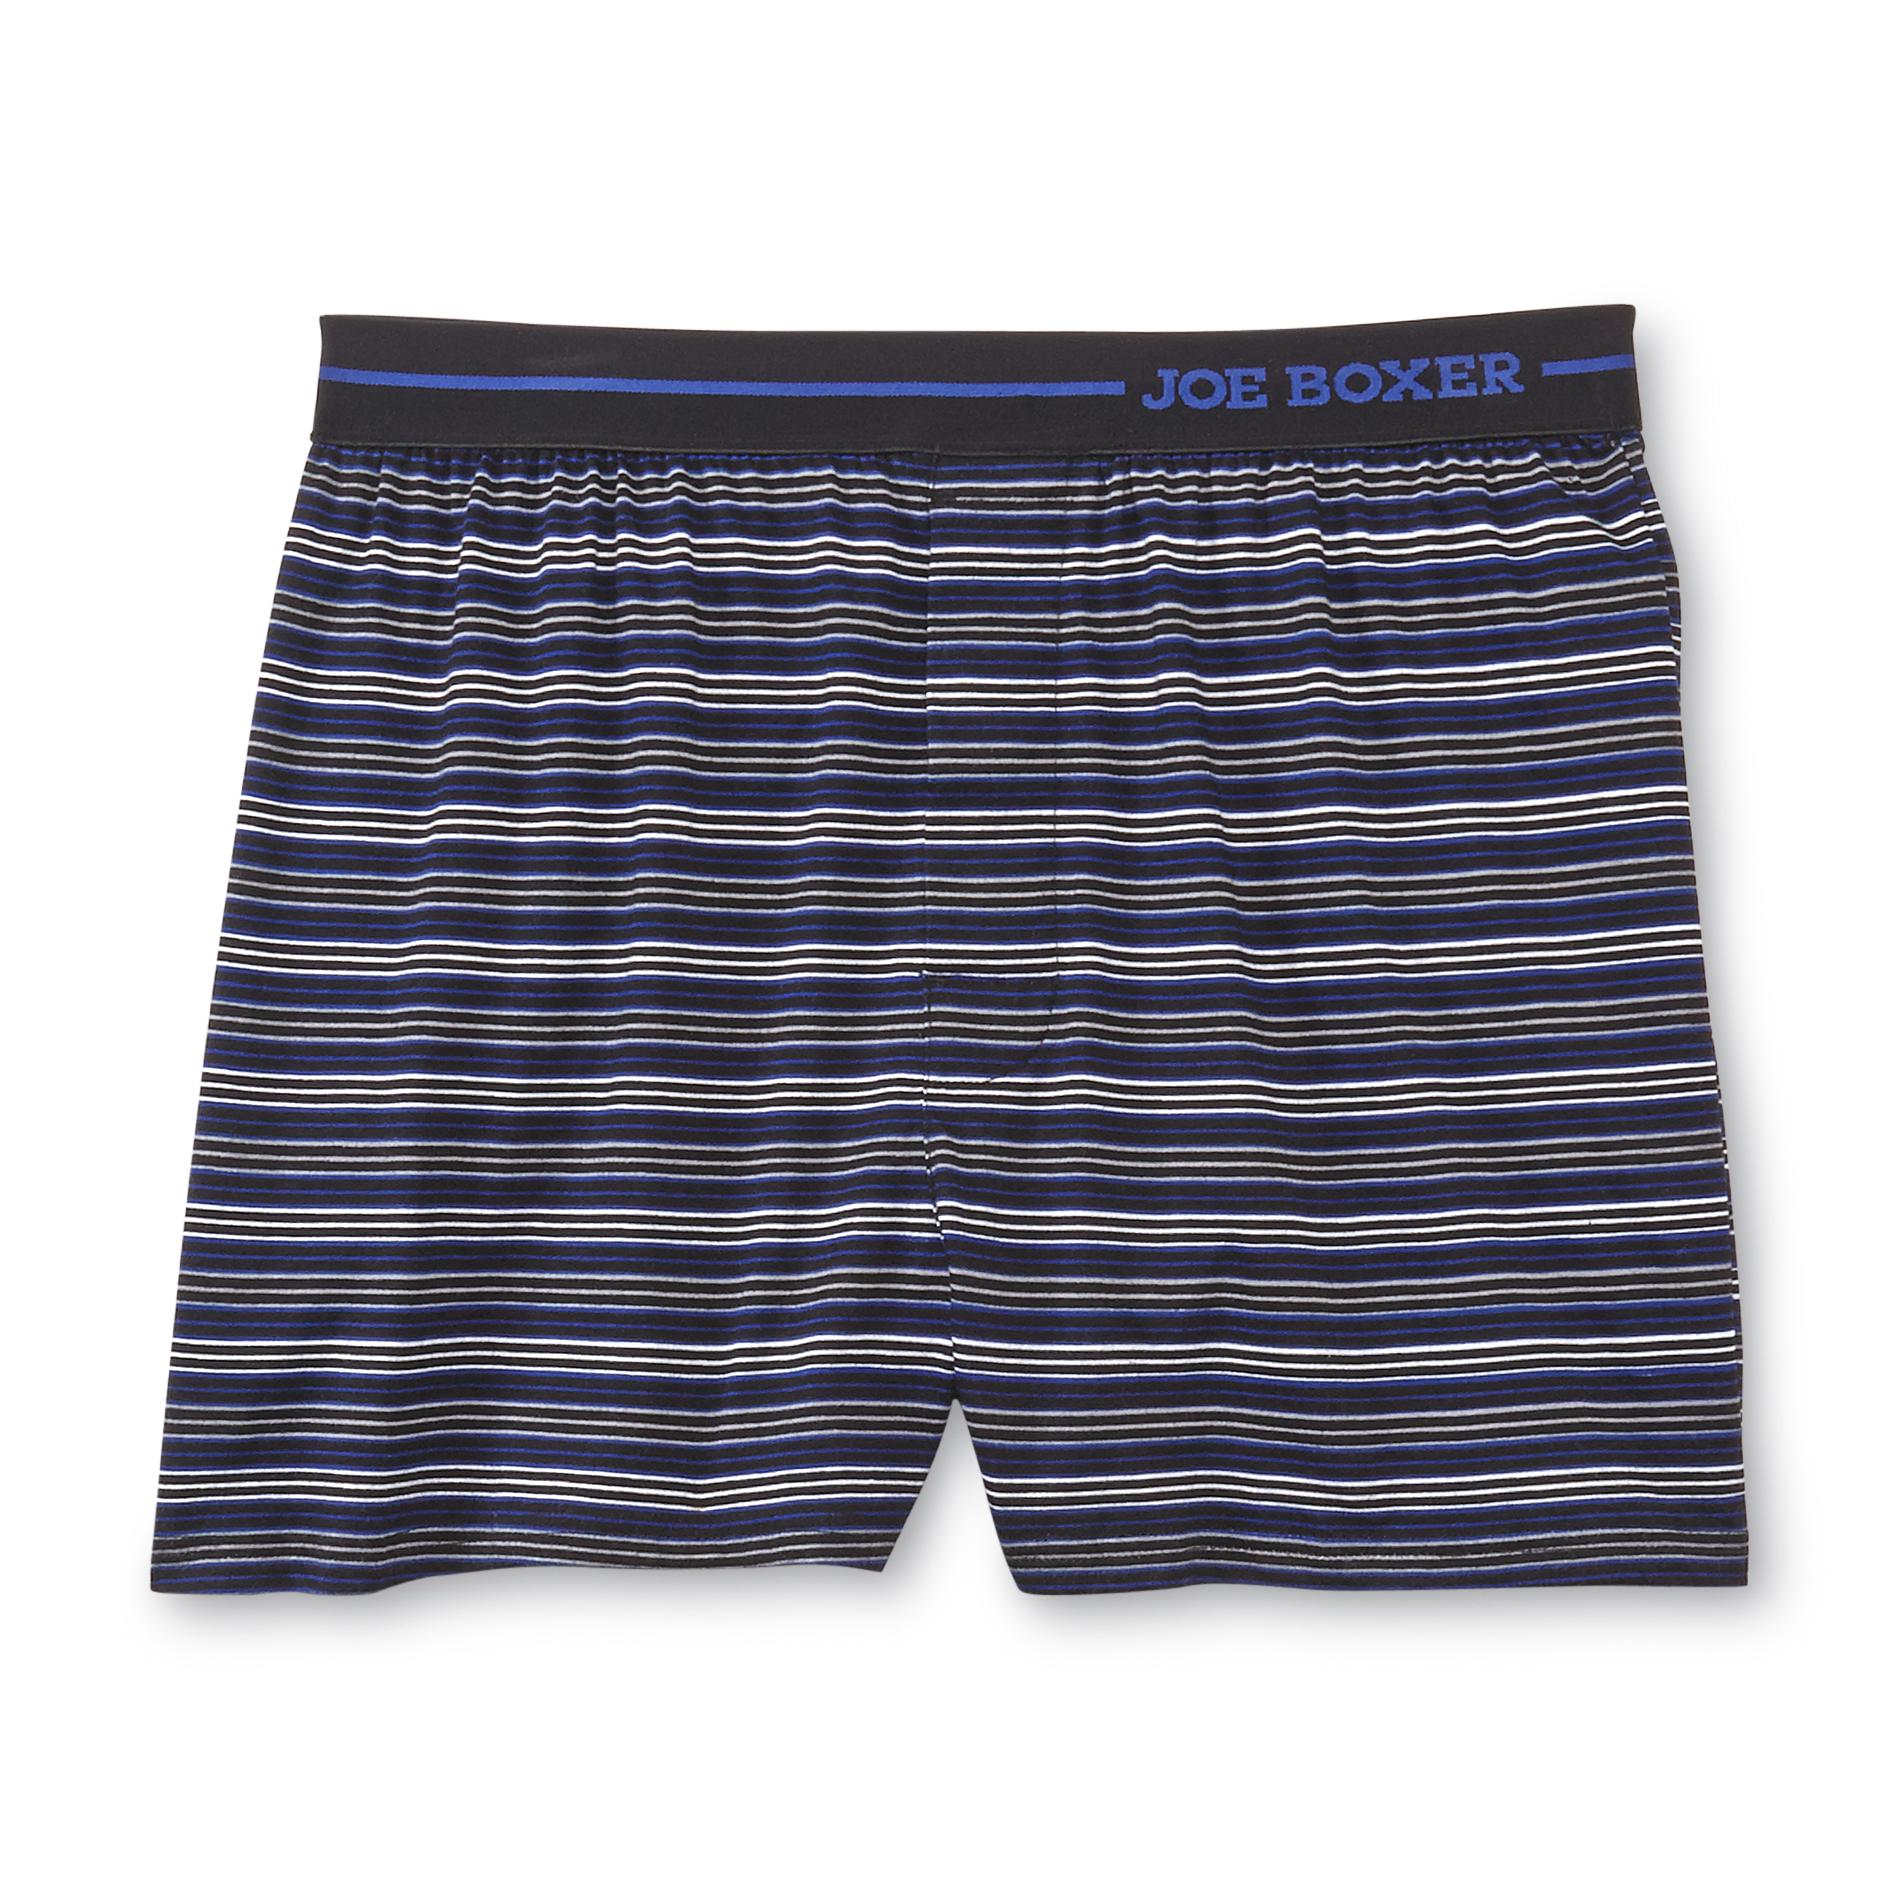 Men's Boxer Shorts - Striped